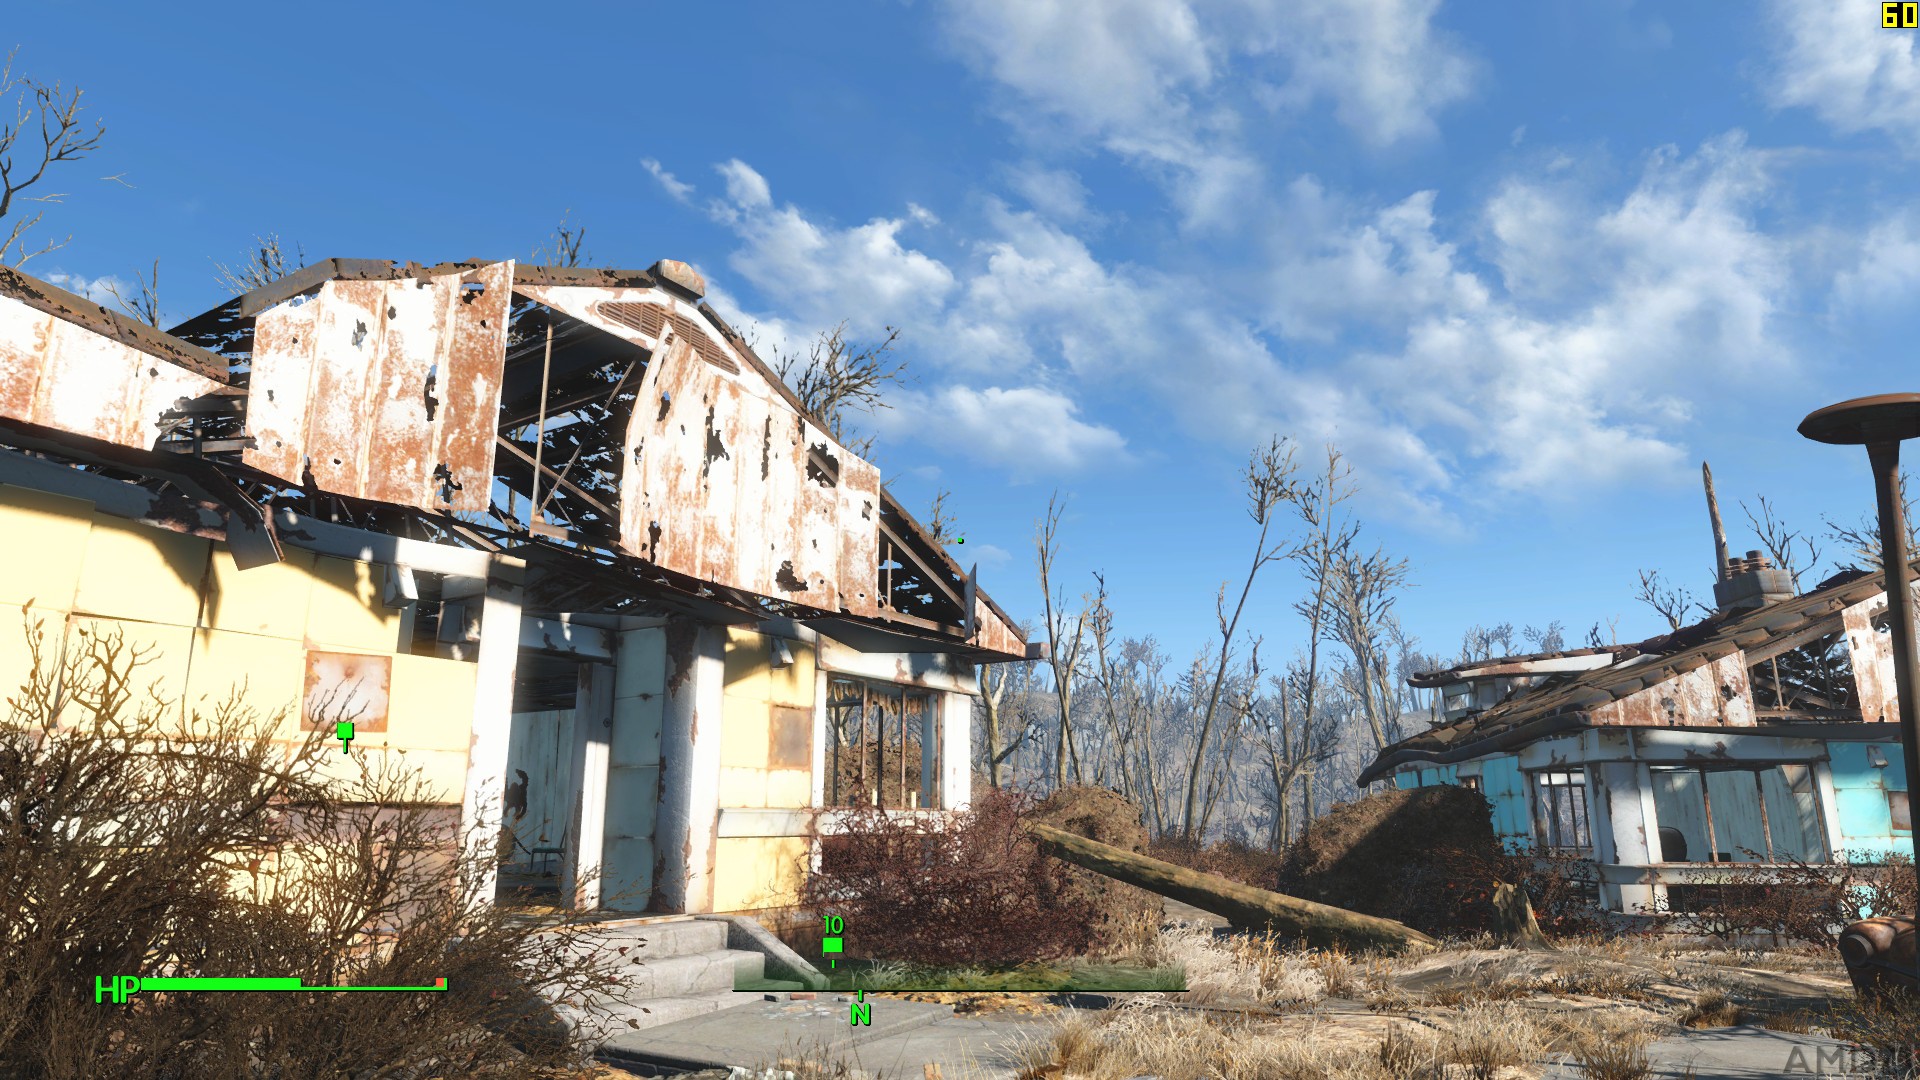 Fallout4 8.jpg